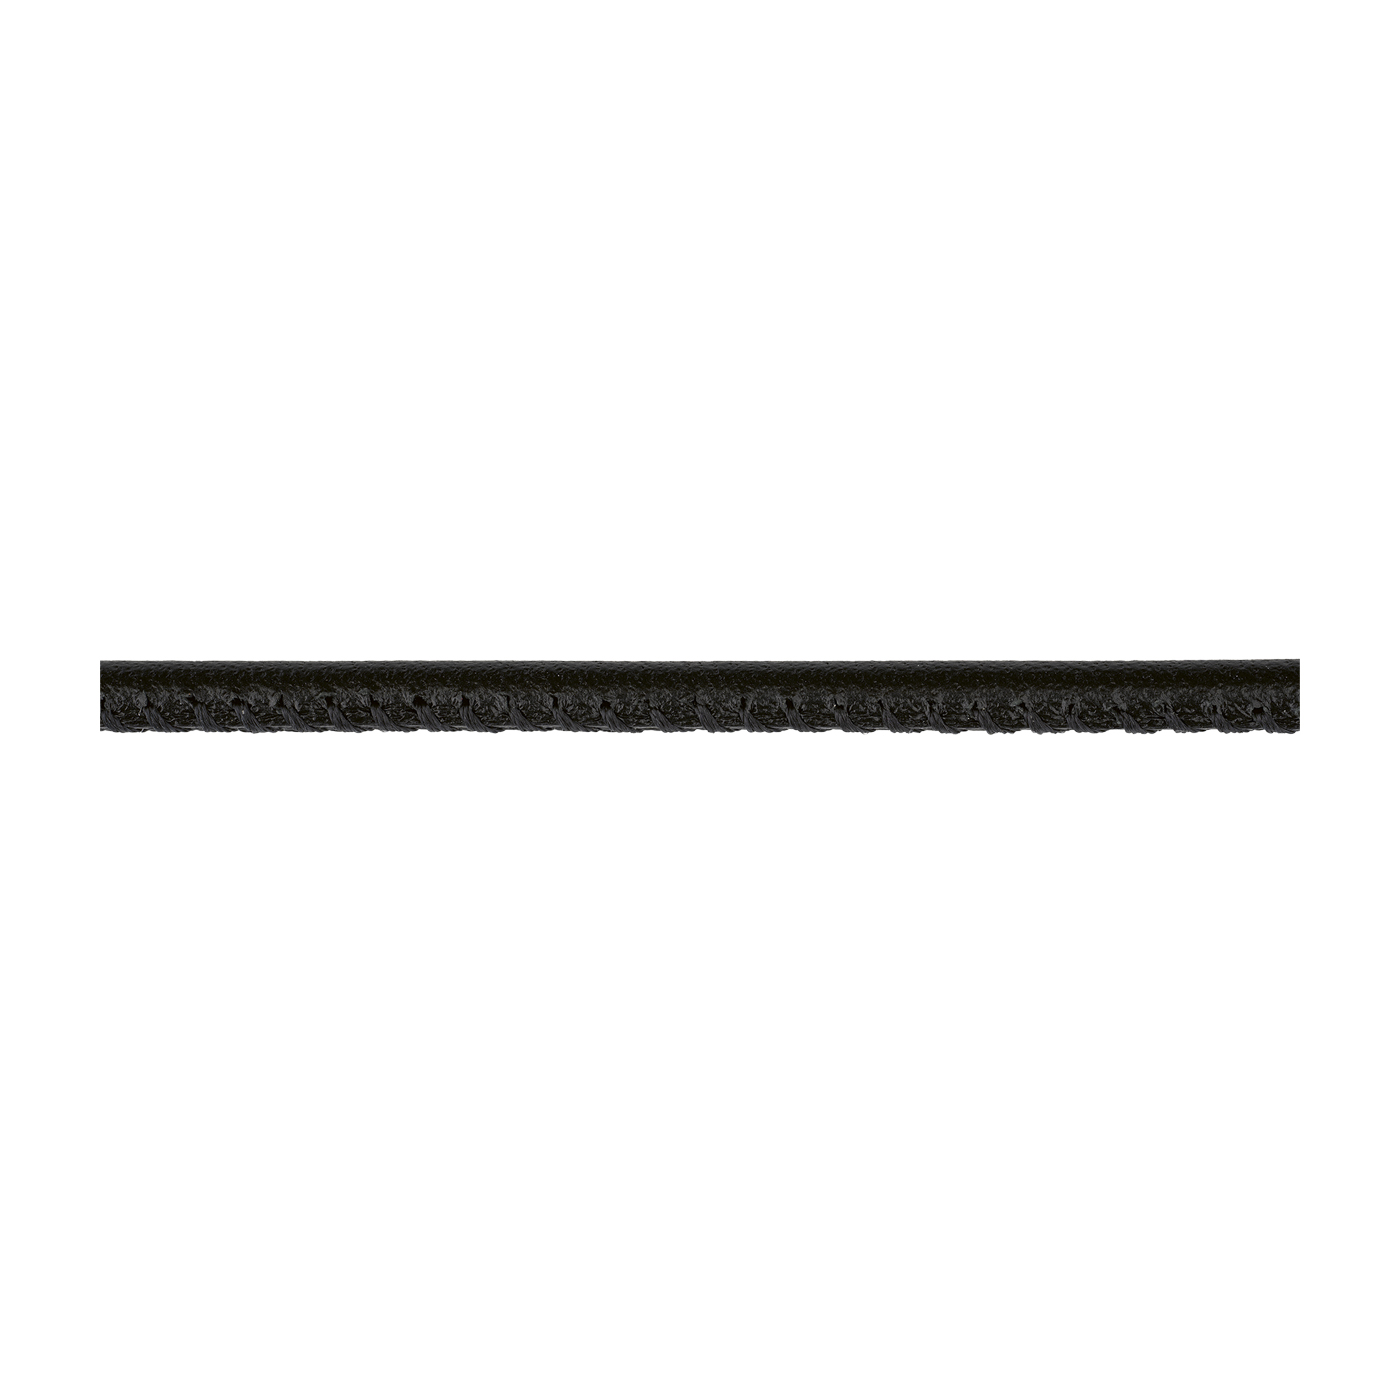 Lederband, schwarz, ø 3 mm, aus Kalbsleder - 1 m